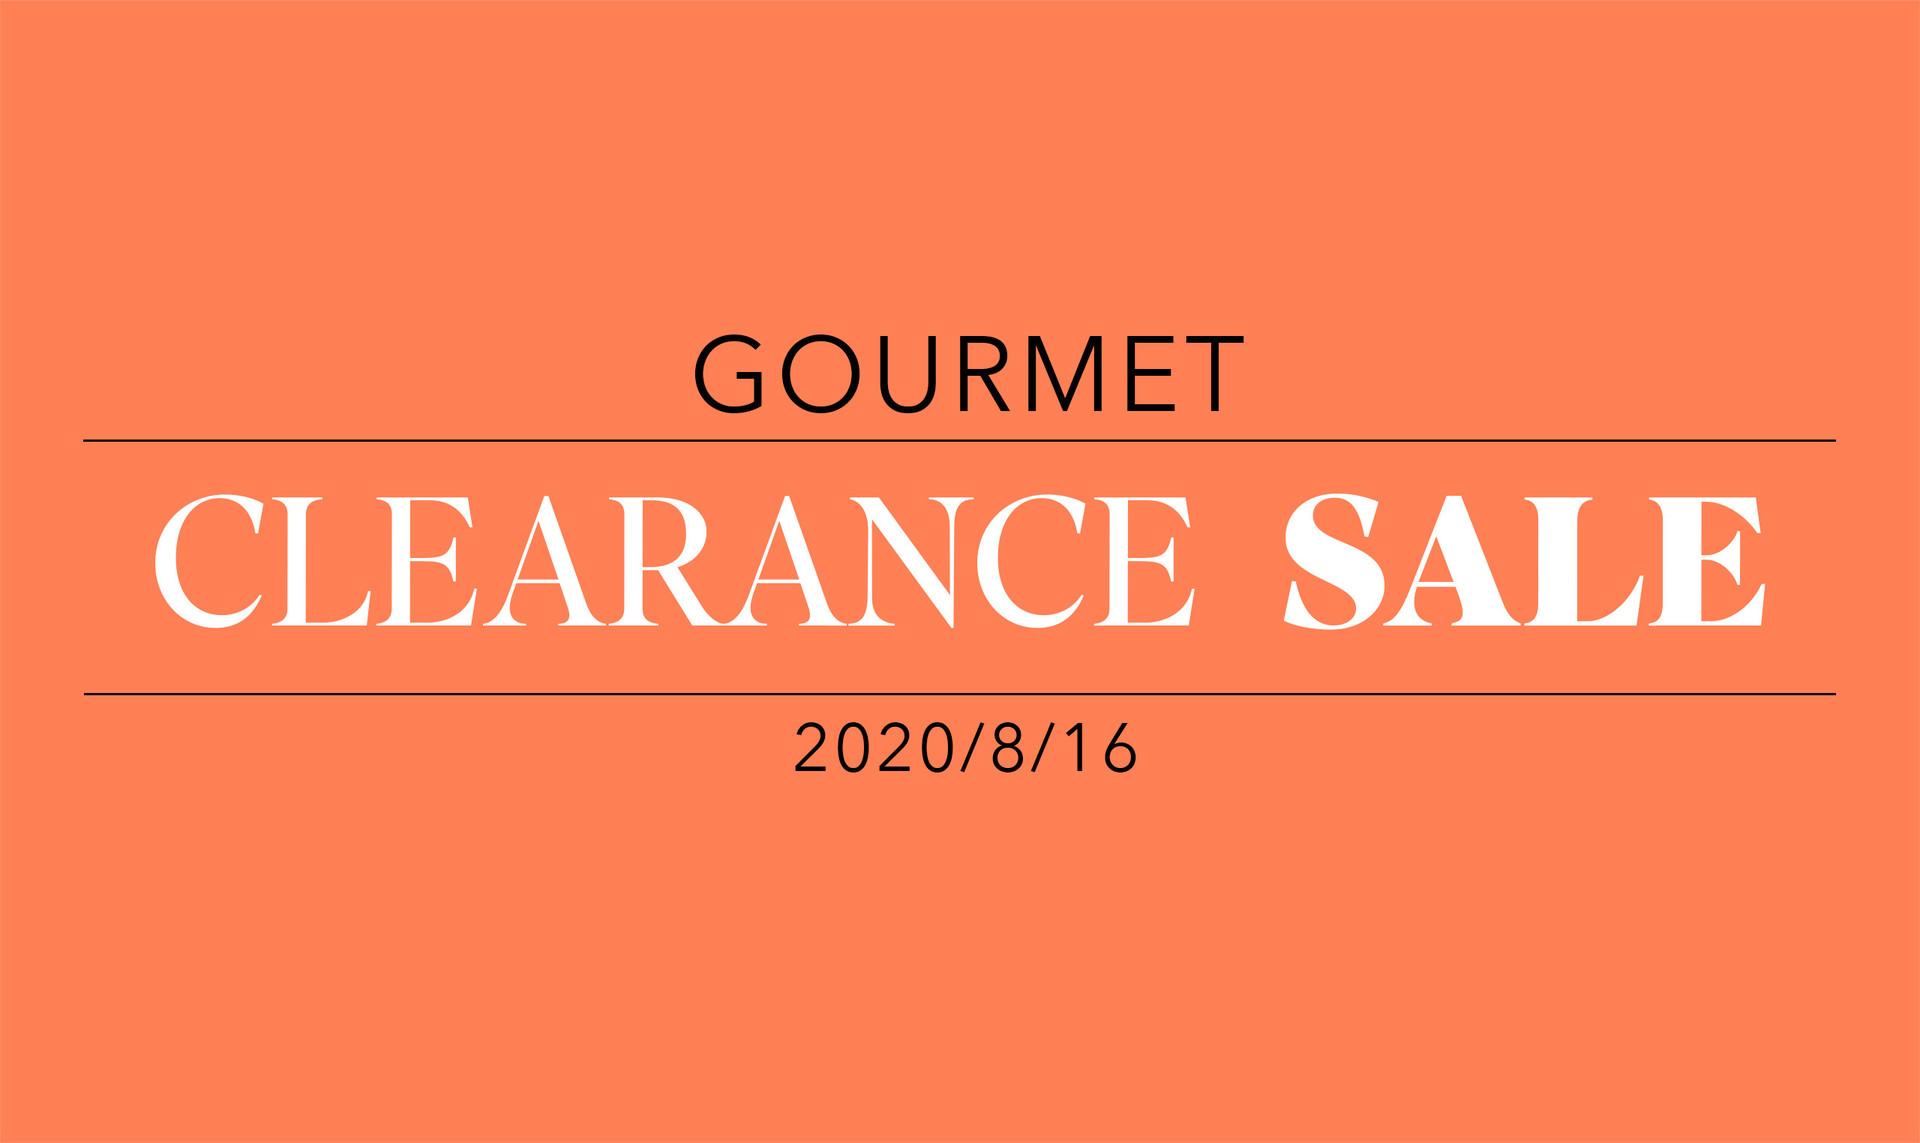 Clearance sale : Gourmet